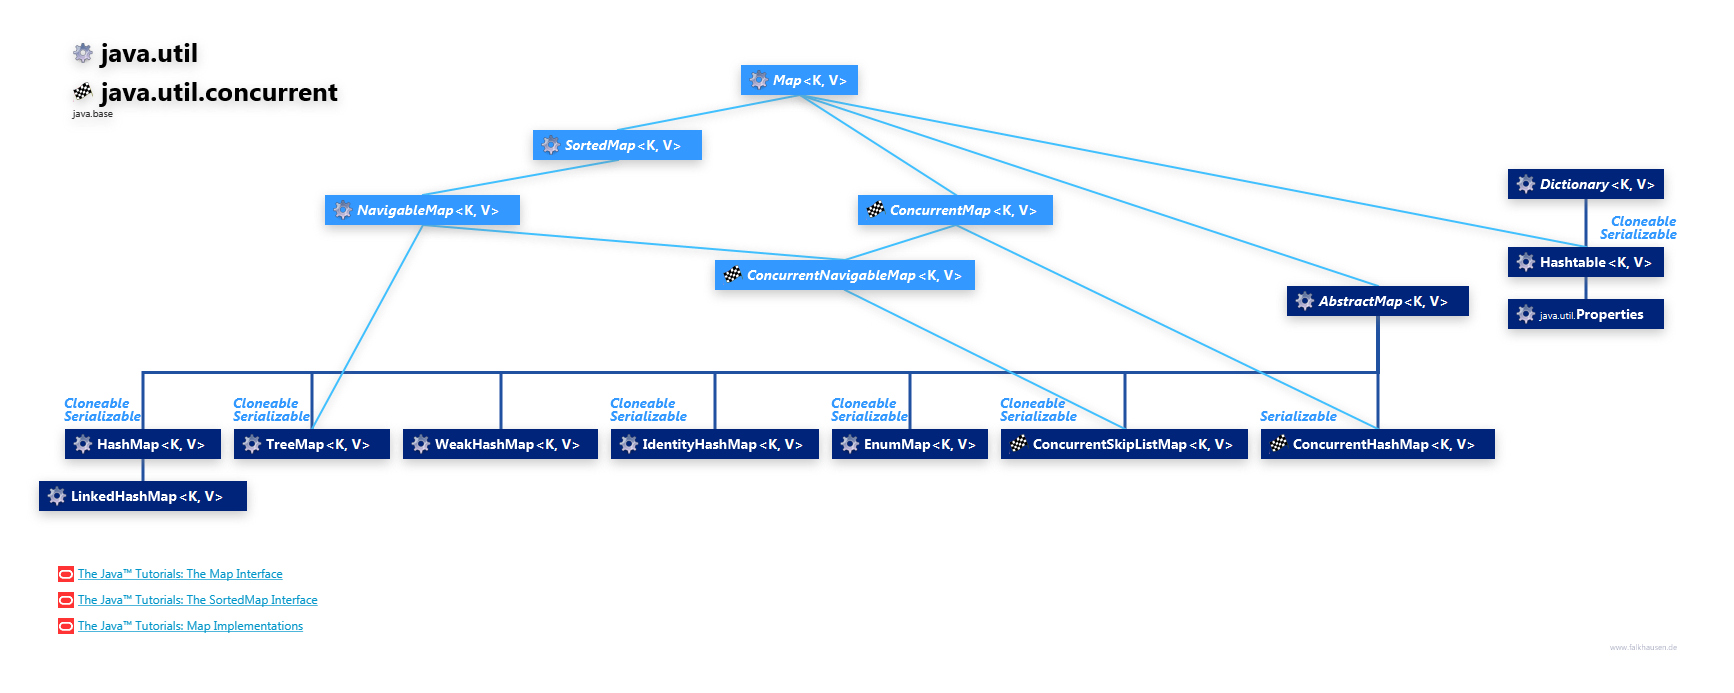 java.util java.util.concurrent Map Hierarchy class diagram and api documentation for Java 10